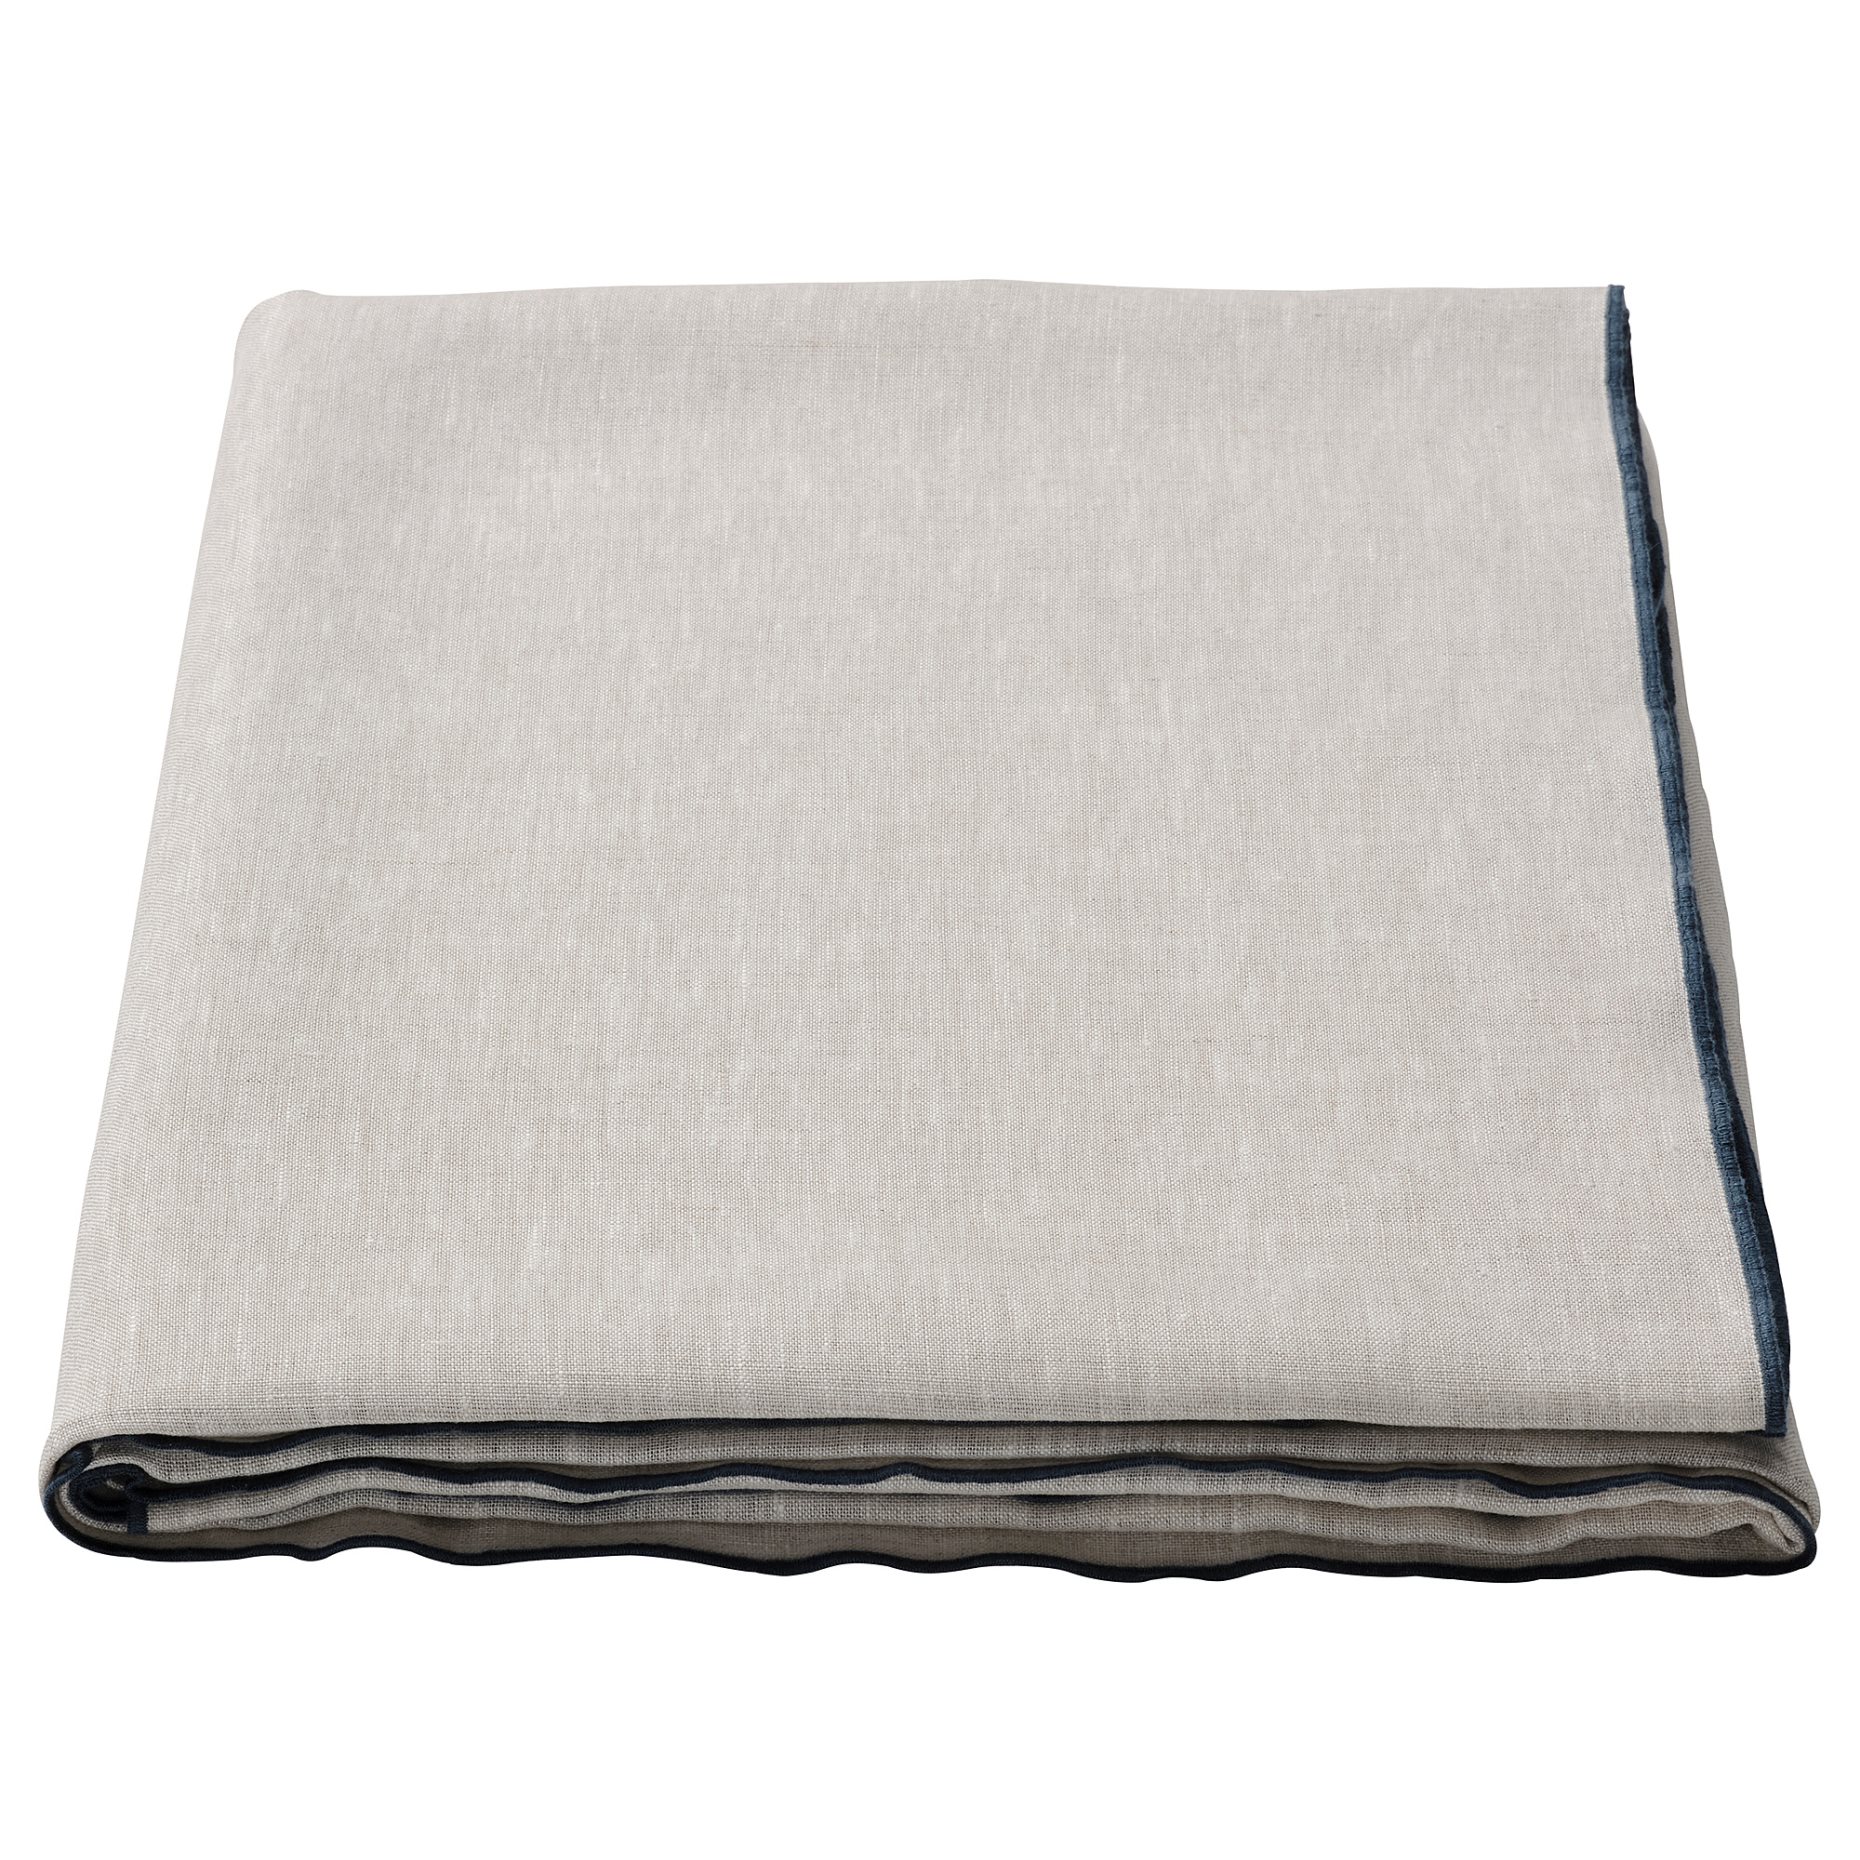 OMBONAD, tablecloth, 150x250 cm, 505.089.11